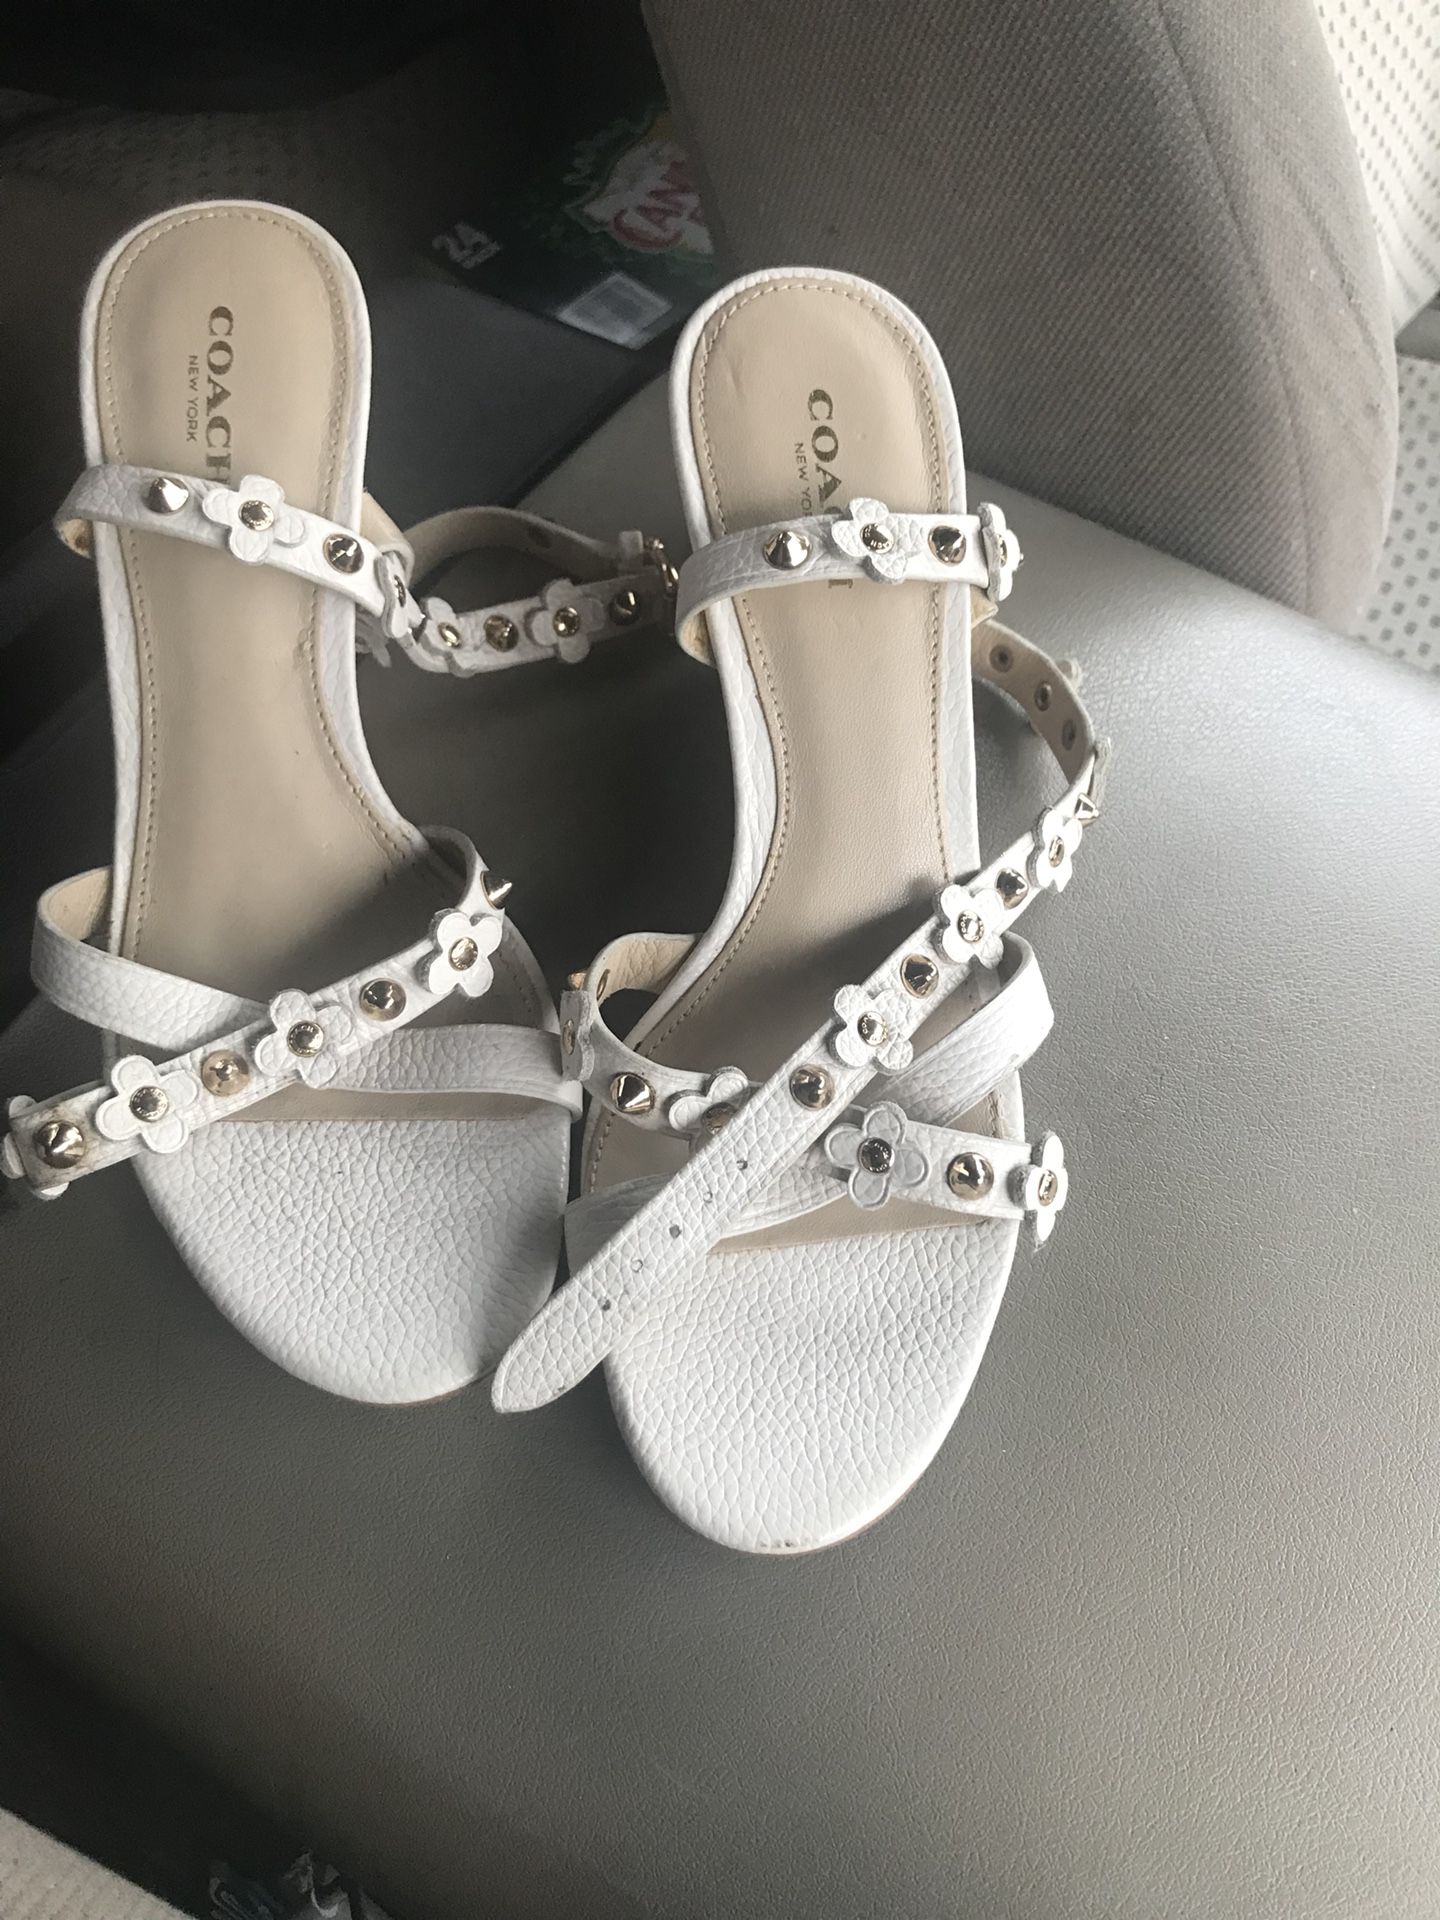 Brand new women’s Coach sandals size 6